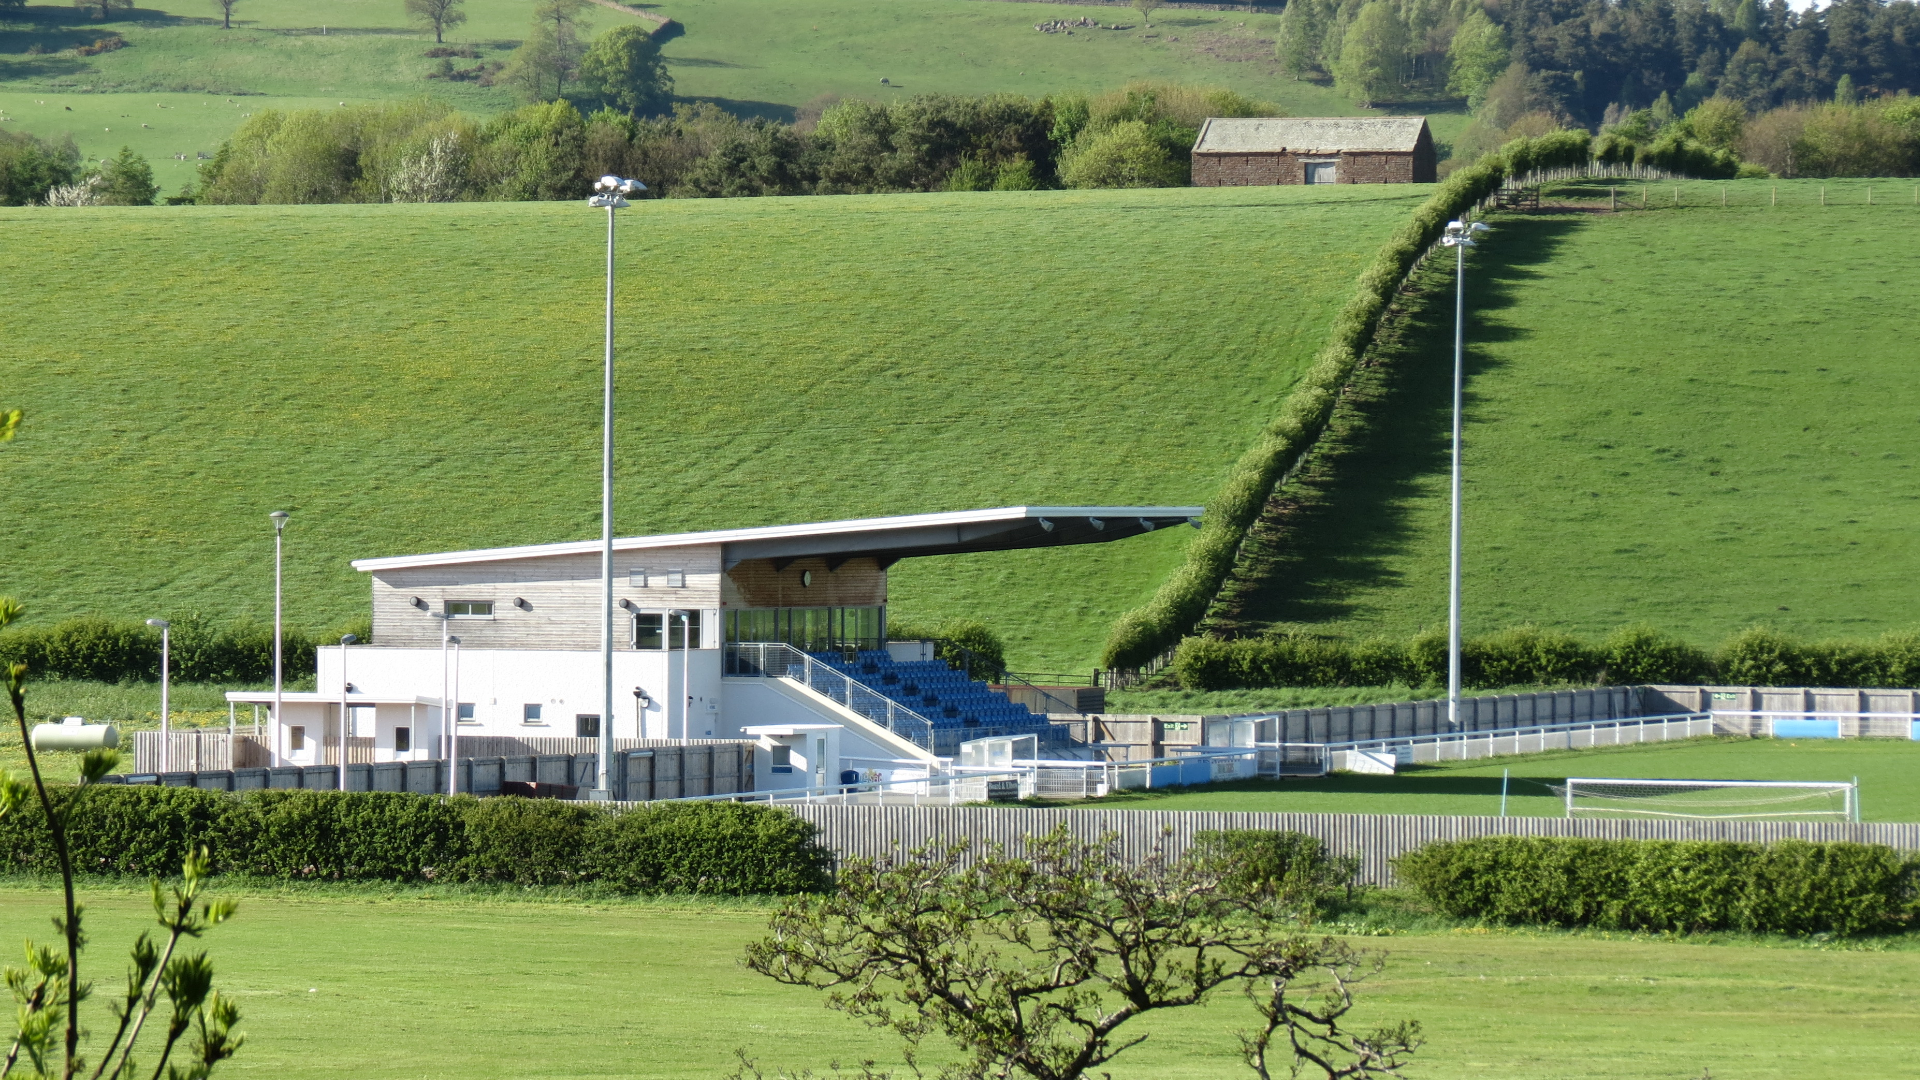 Penrith Football Club, New Stadium & Extension